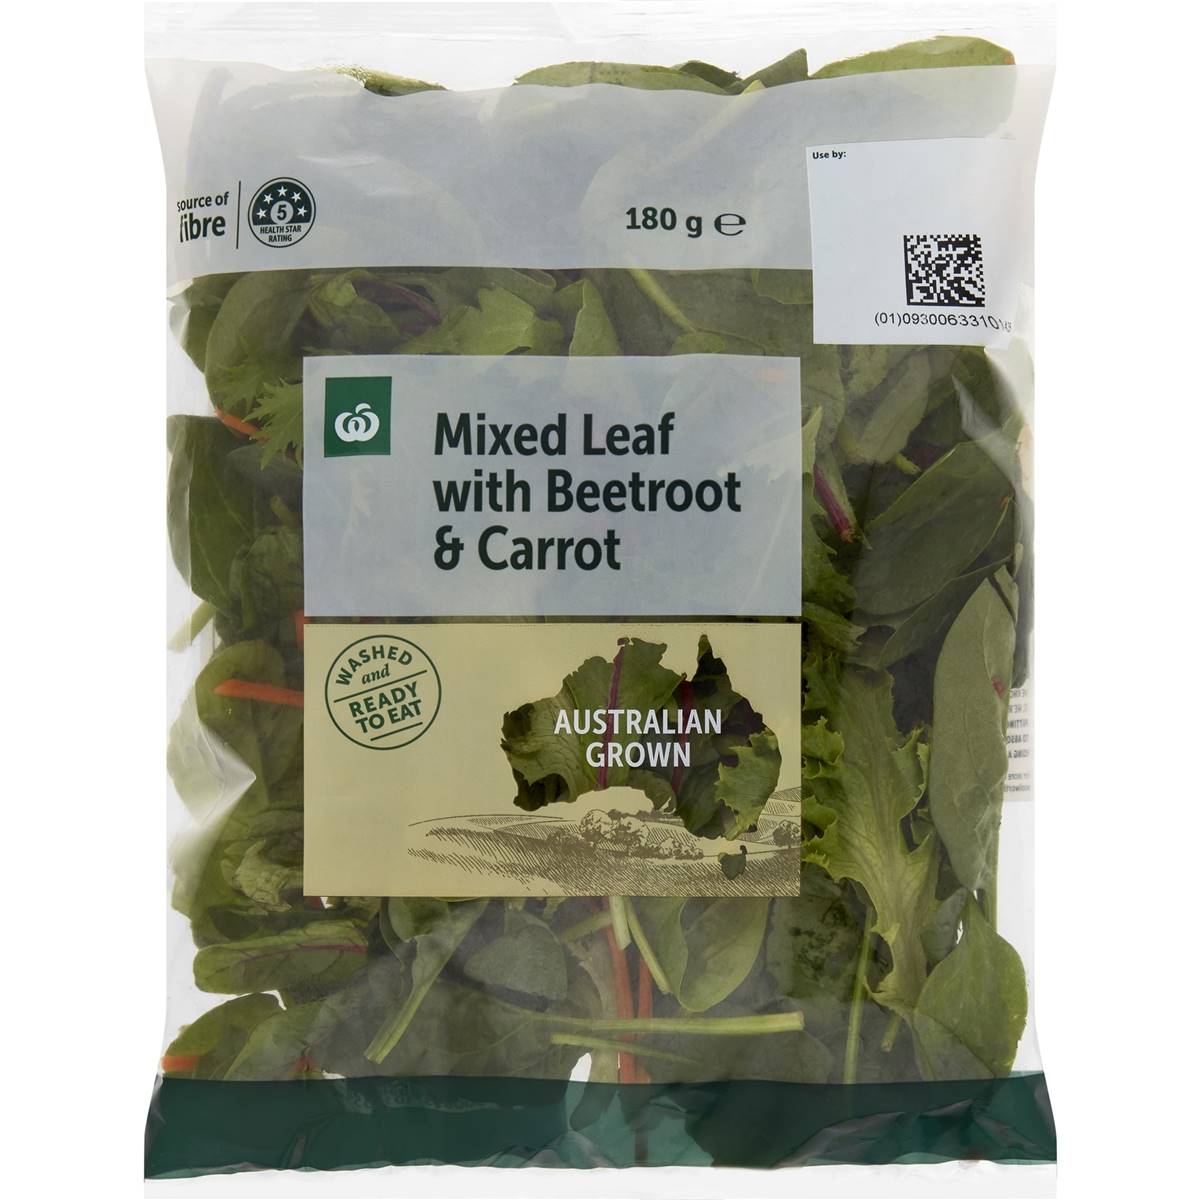 Calories in Woolworths Baby Leaf Beetroot Salad With Beetroot Bag